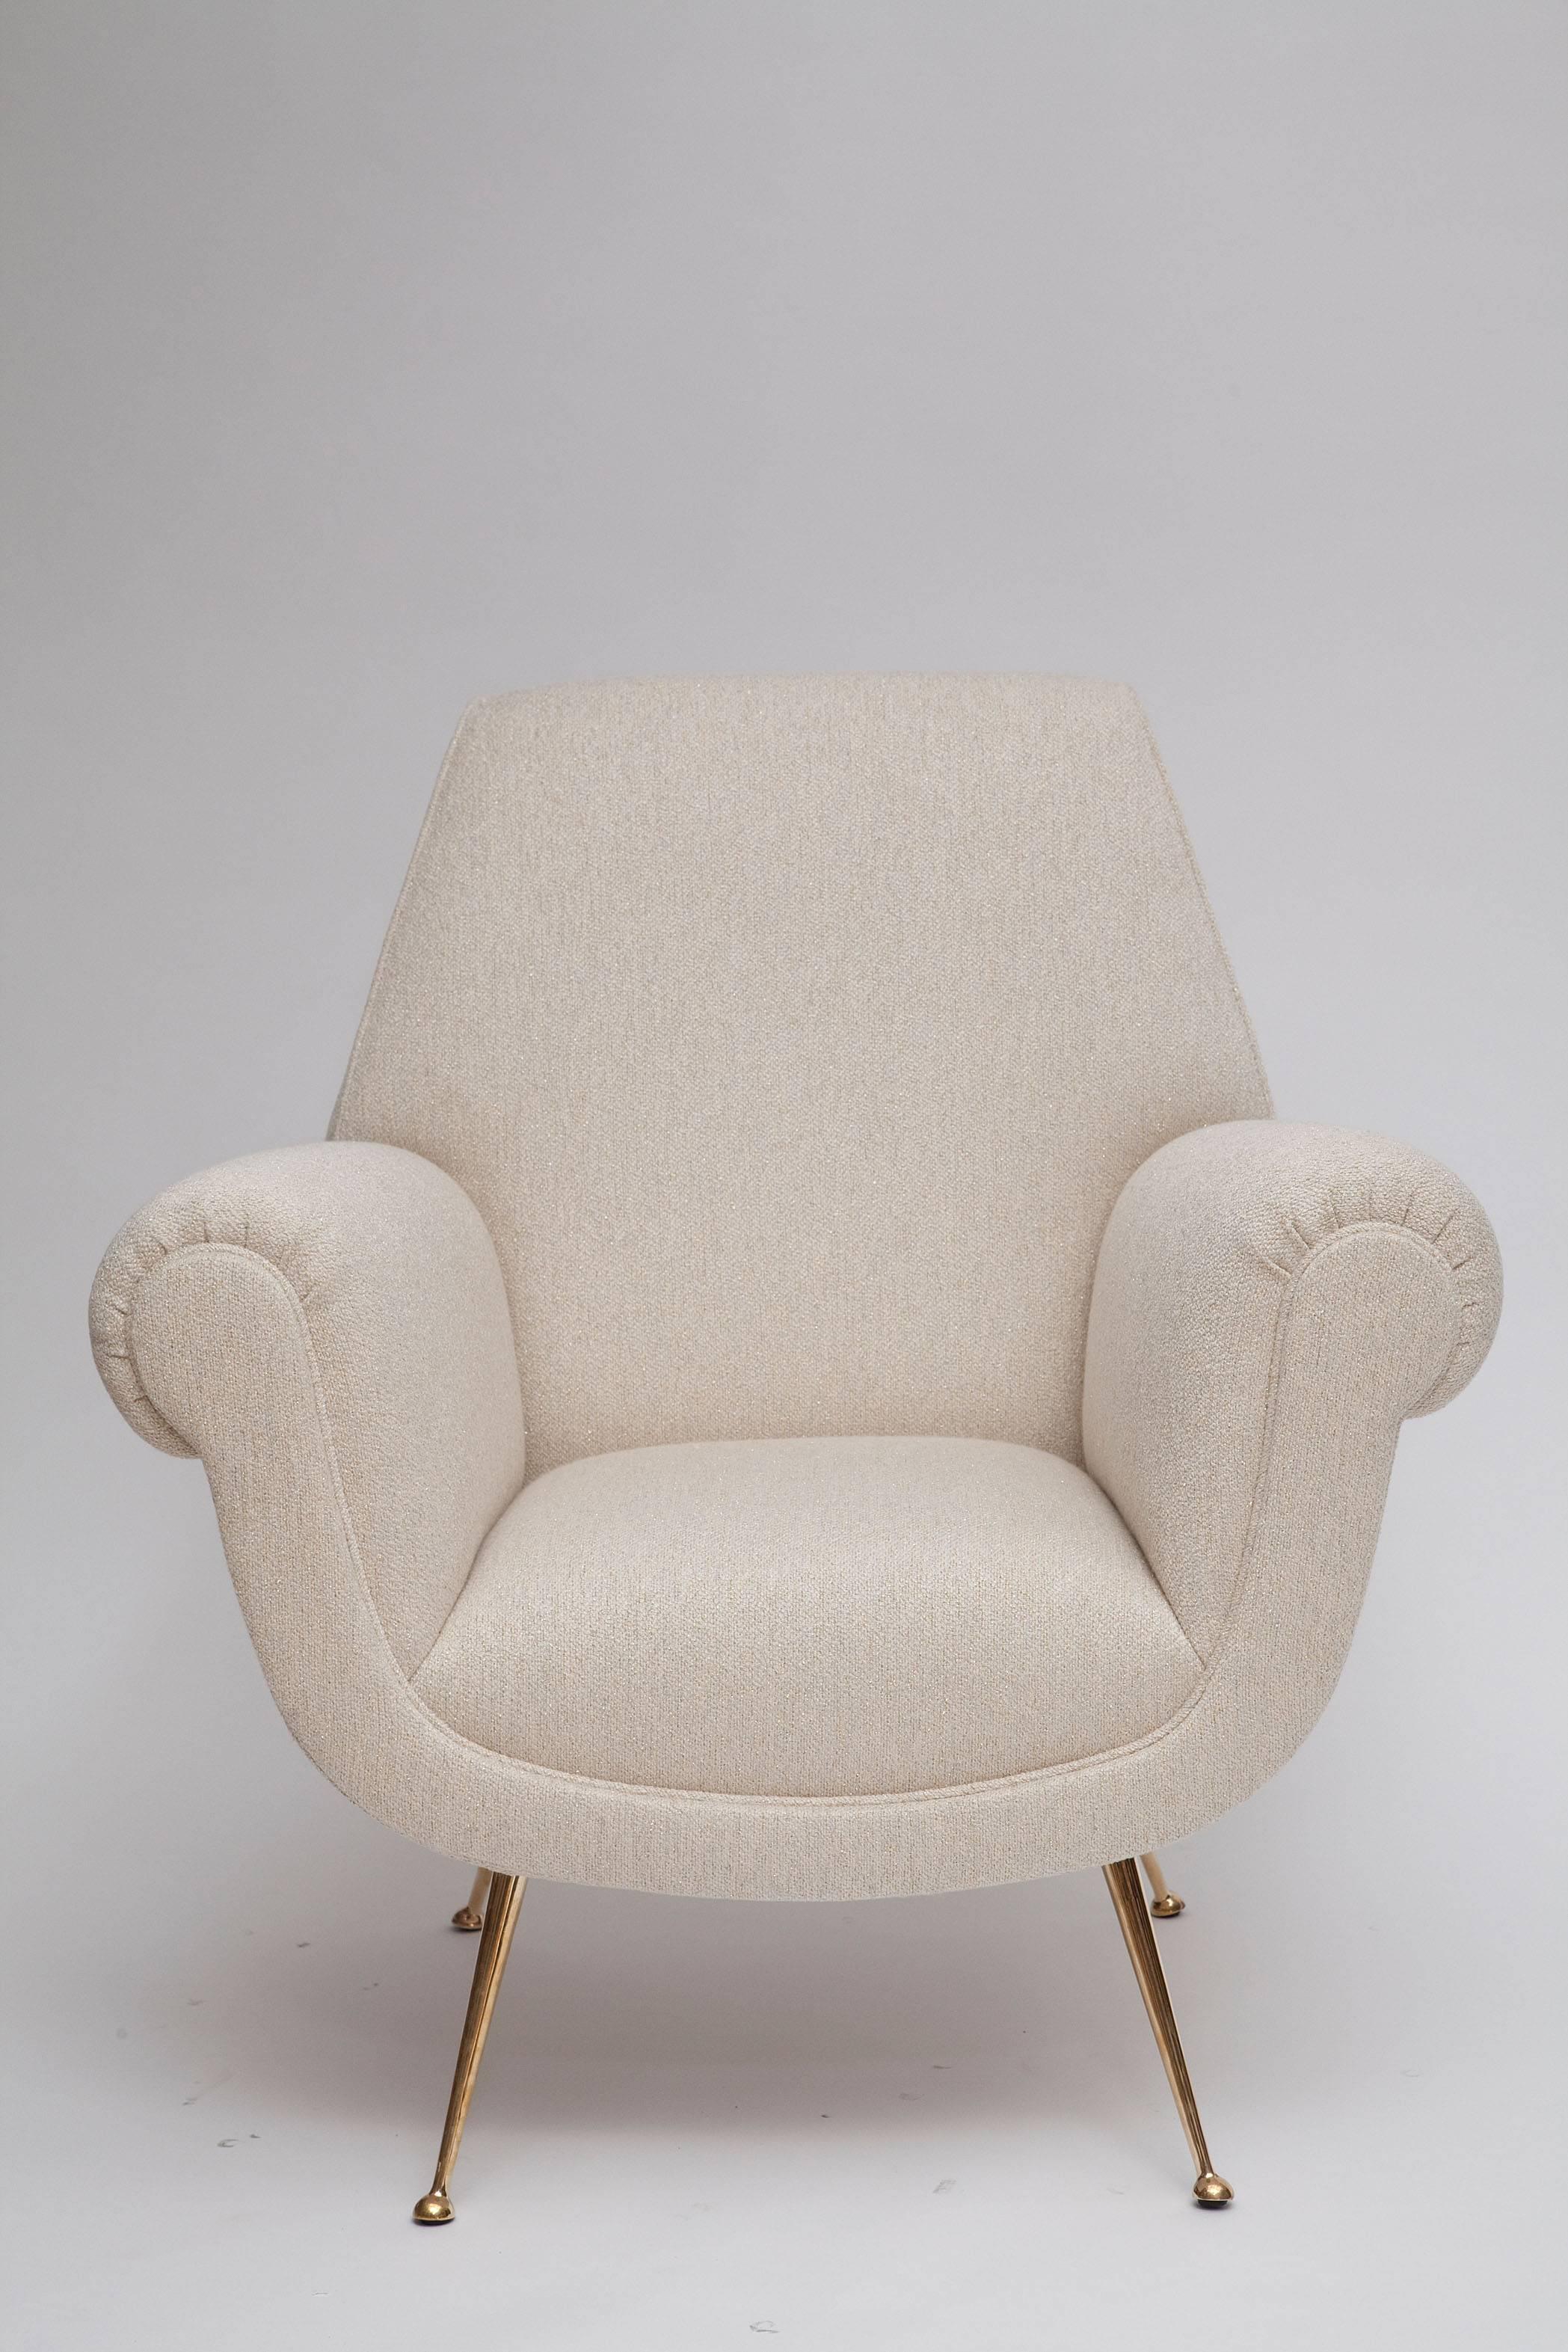 Mid-Century Modern Fully Restored Pair of 1950s Italian Lounge Chairs by Gigi Radice for Minotti